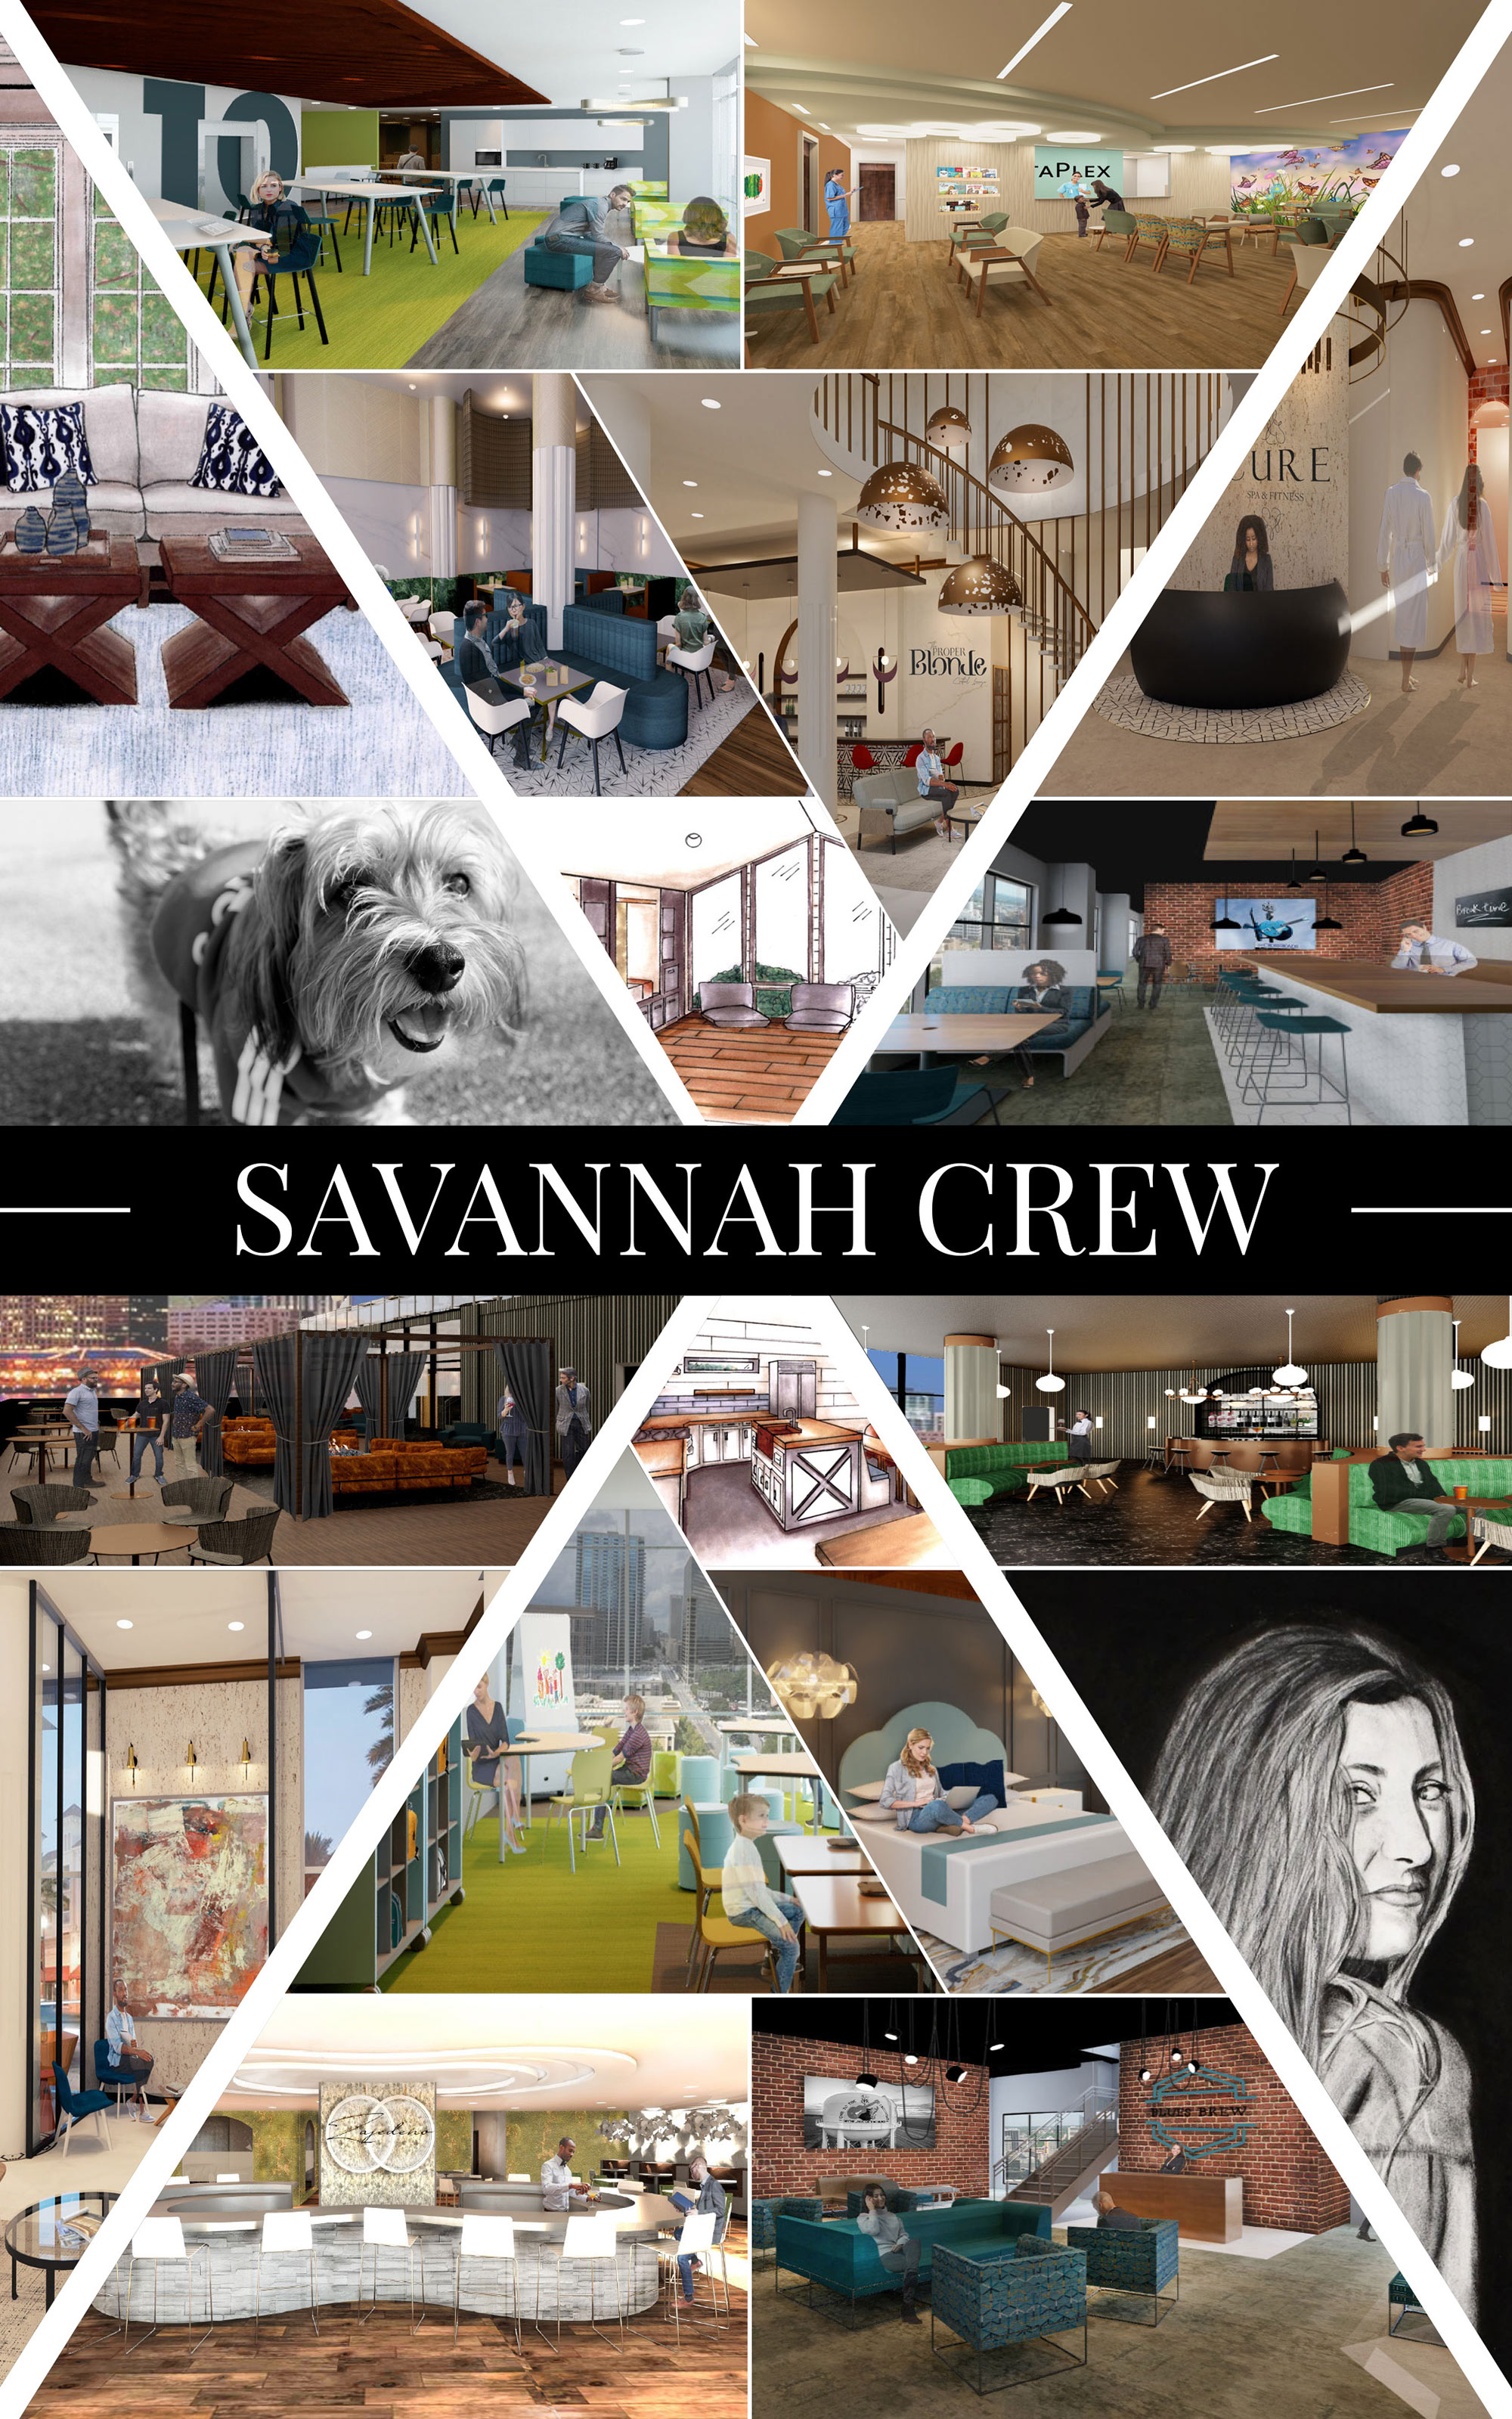 Savannah Crew's senior exhibit board